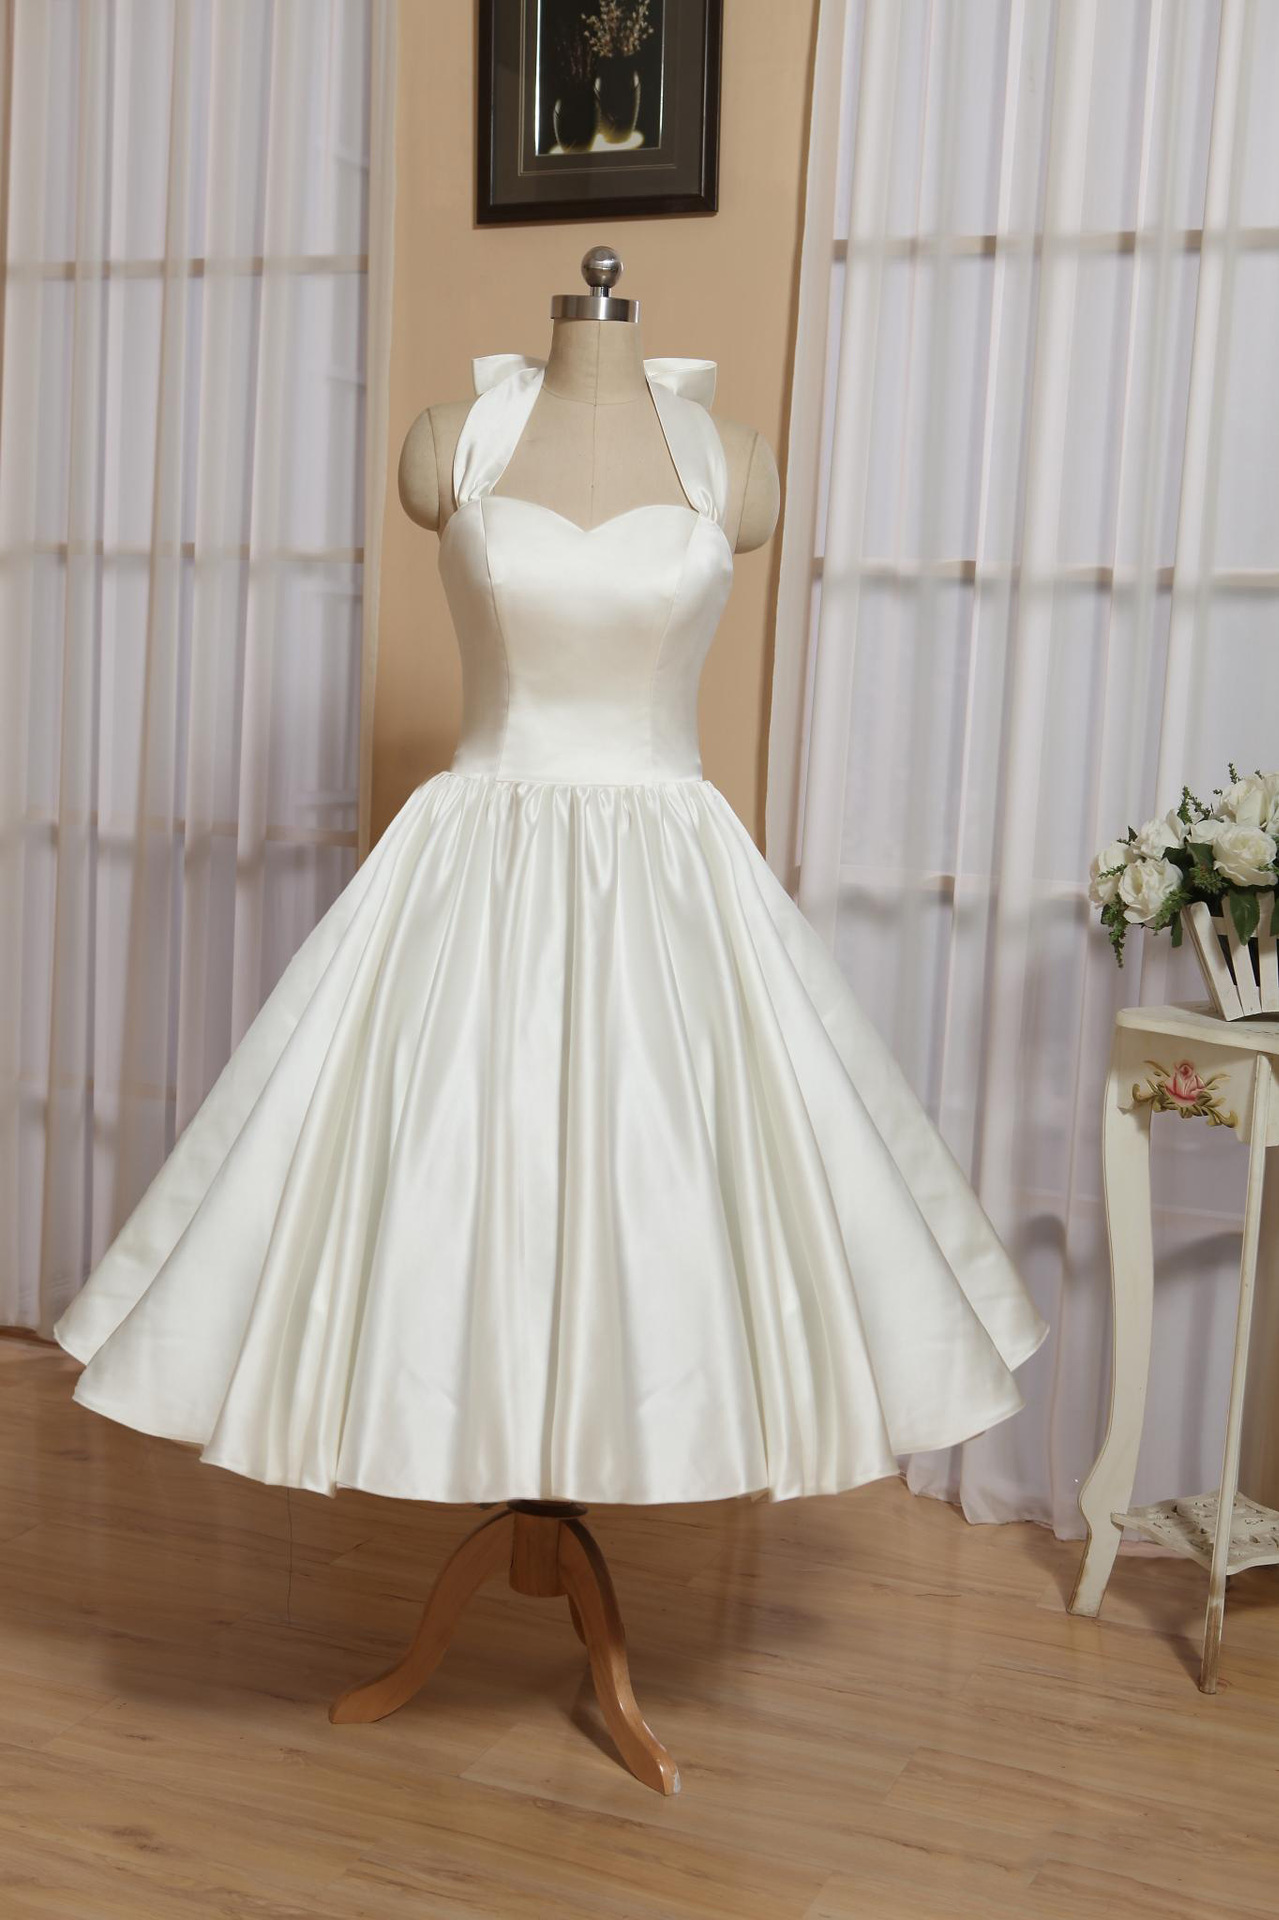 Halter Neck Prom Dress, White Homecoming Dress, Satin Party Dress, Formal Dress Cute Mini Dress,custom Made